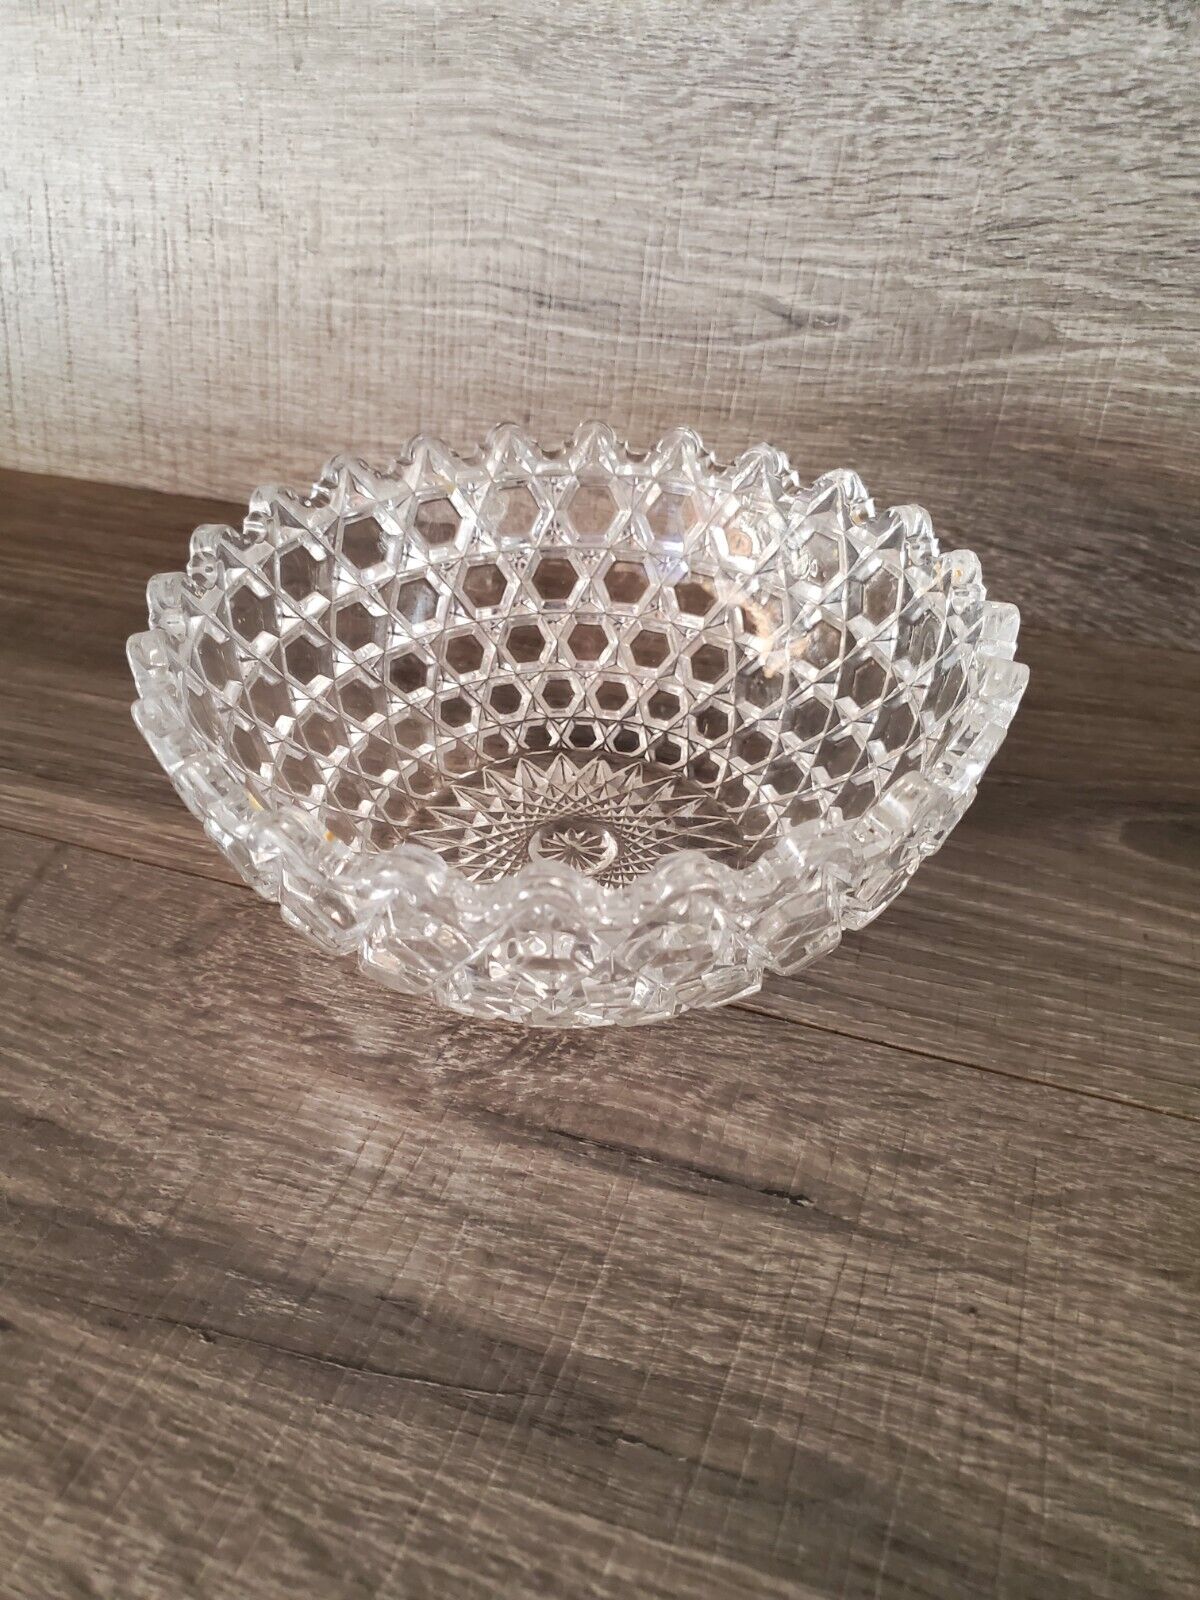 Vintage Clear Crystal Cut Glass Bowl; Sharkbite Rim and Criss-cross Pattern 